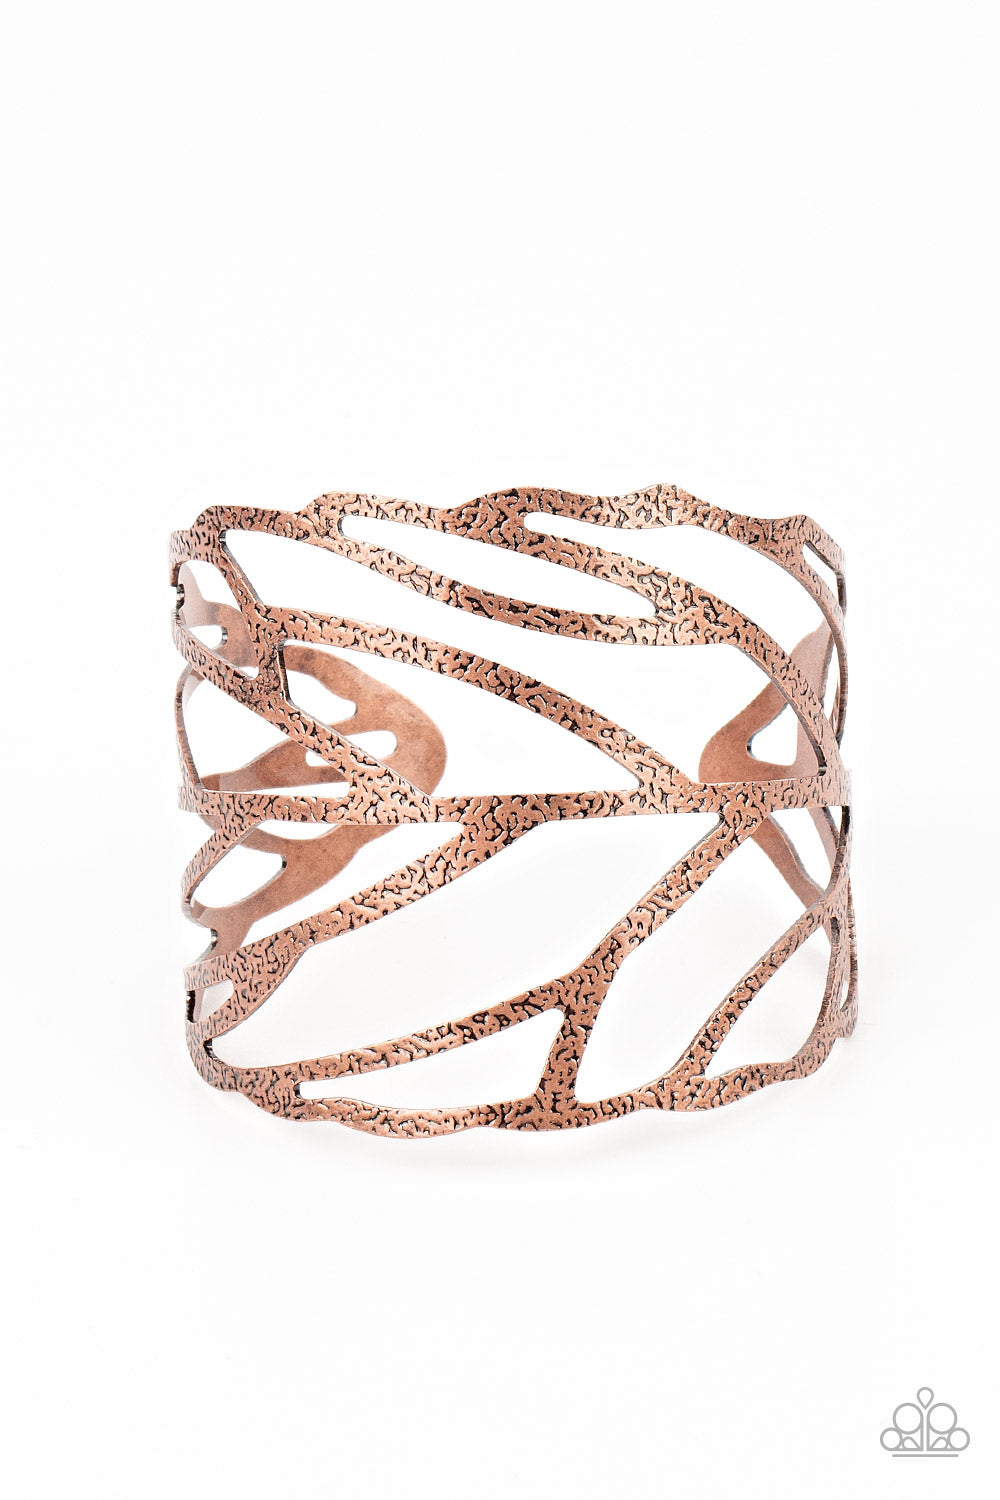 FLOCK, Stock, and Barrel - Copper cuff bracelet C018